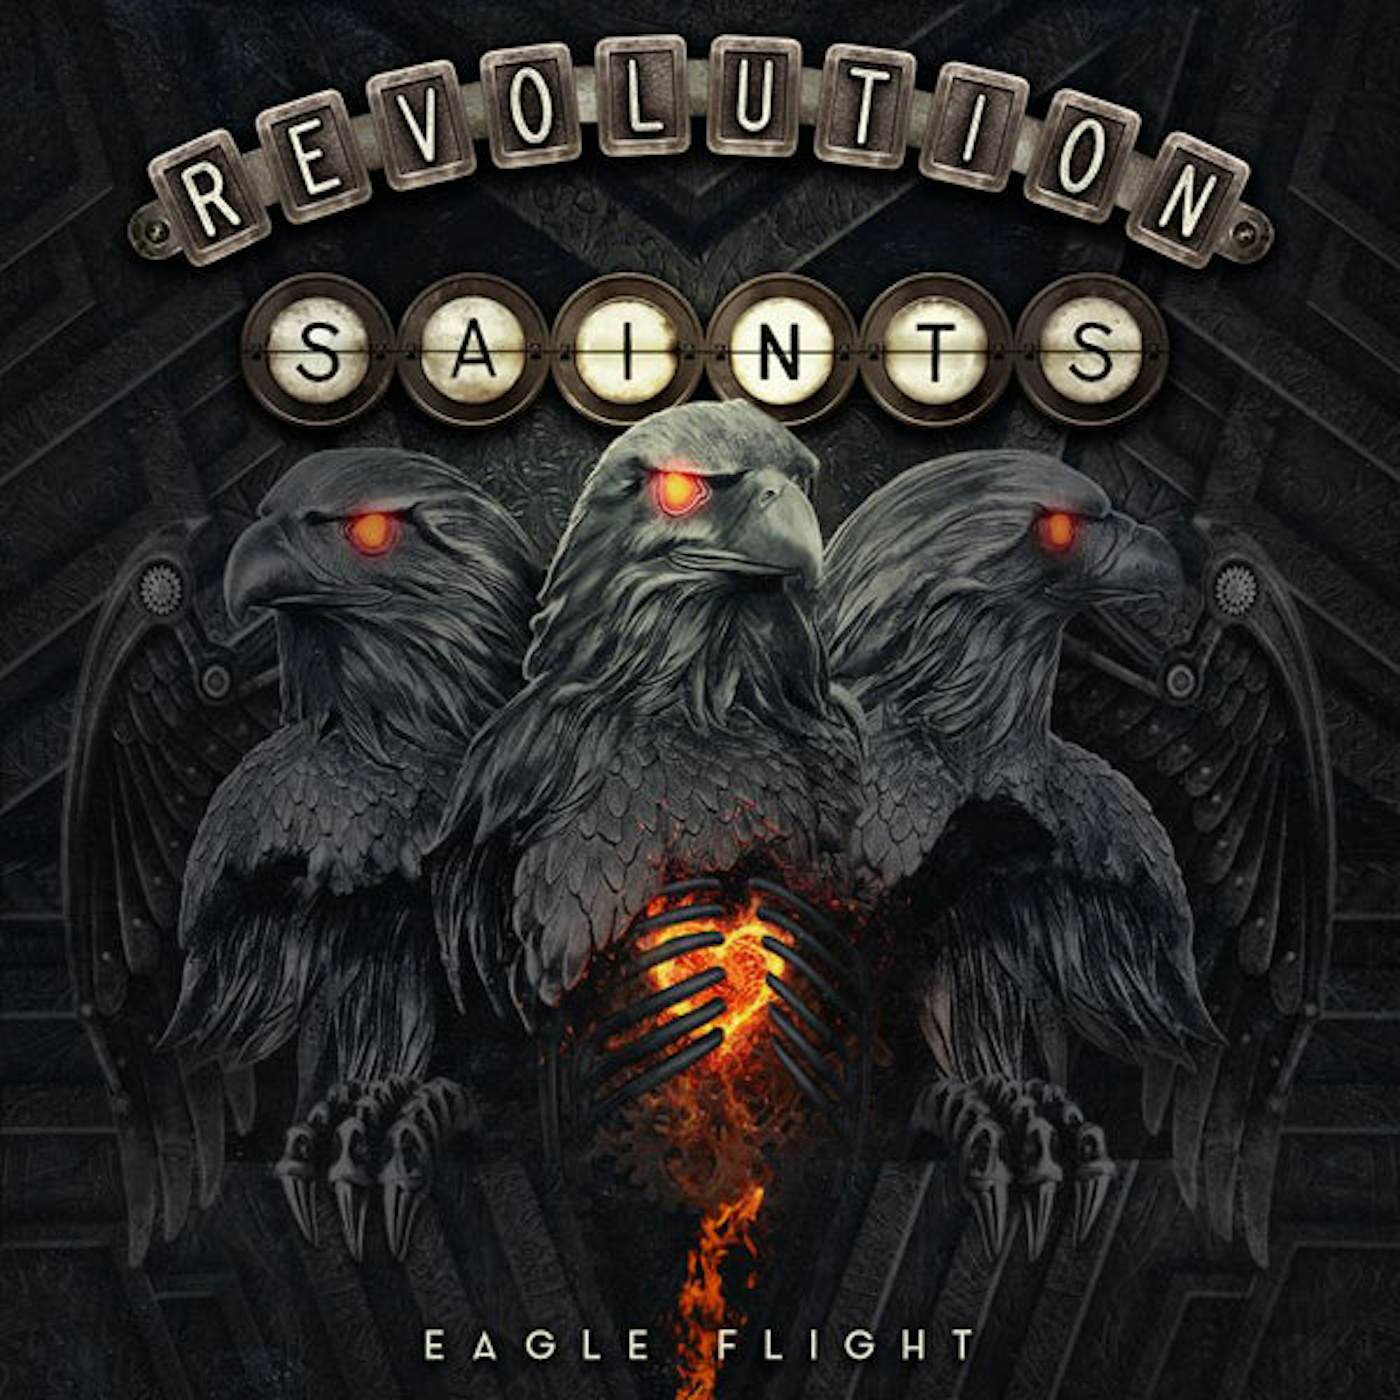 Revolution Saints LP - Eagle Flight Limited Edition (Vinyl)